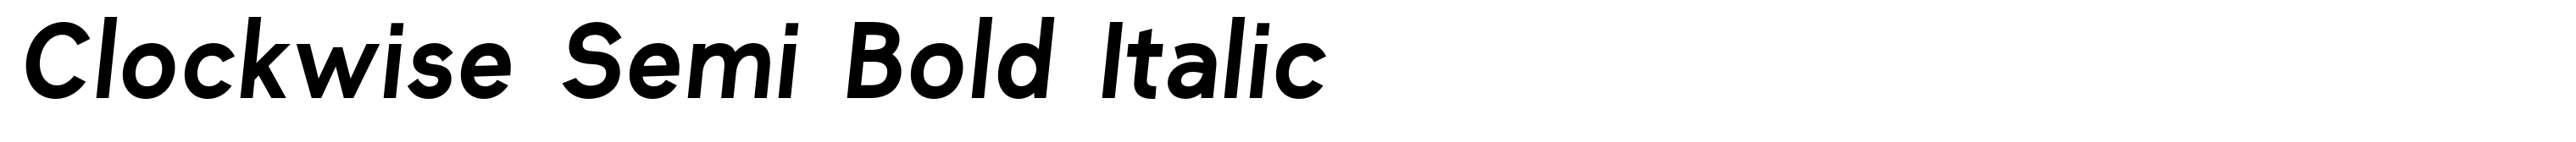 Clockwise Semi Bold Italic